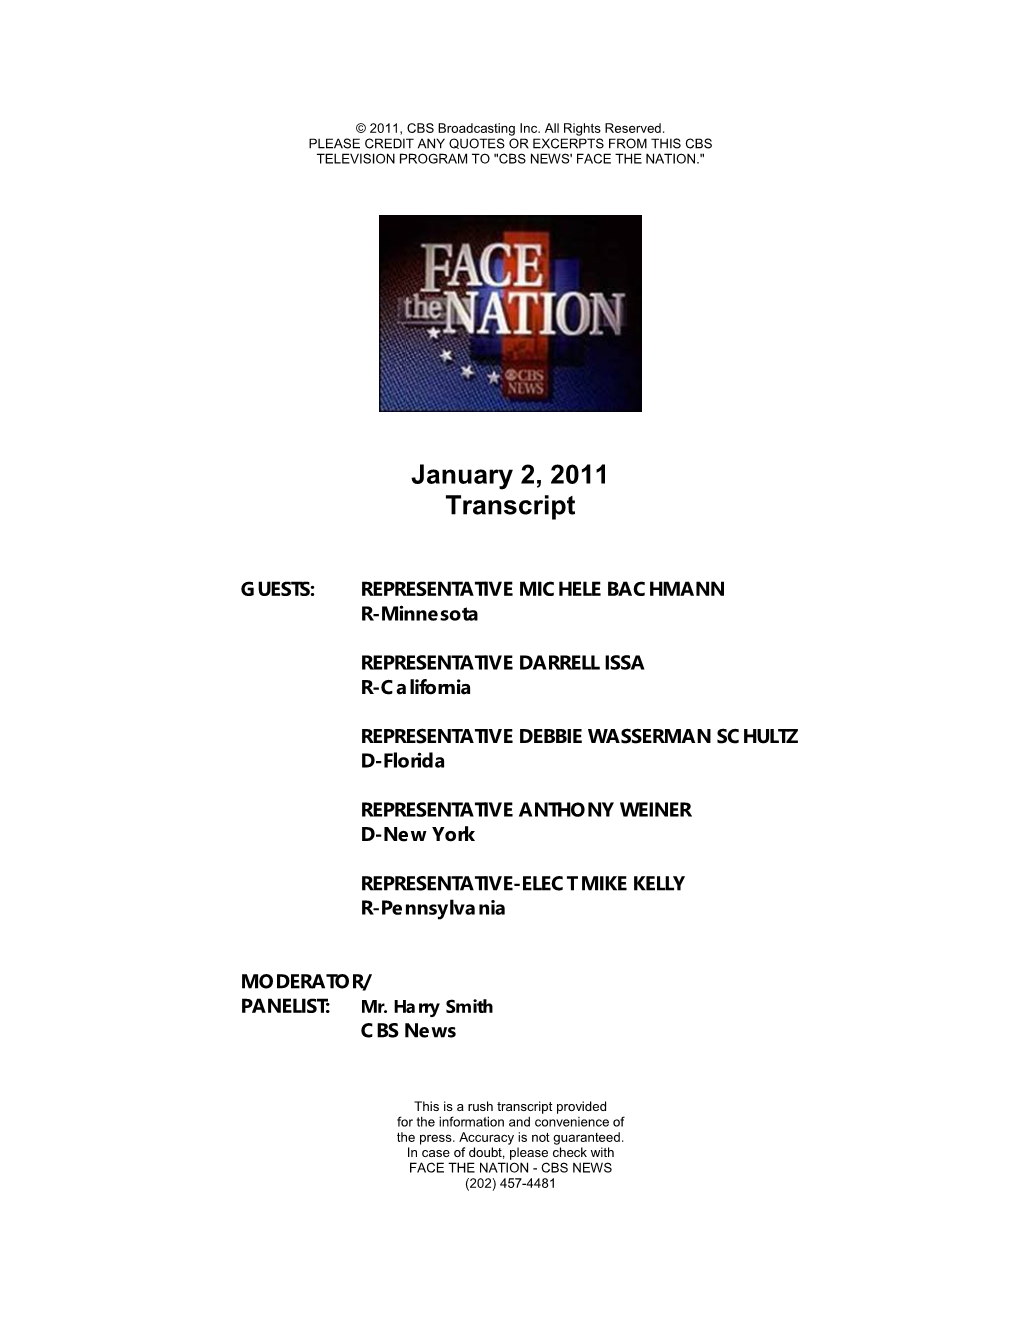 January 2, 2011 Transcript